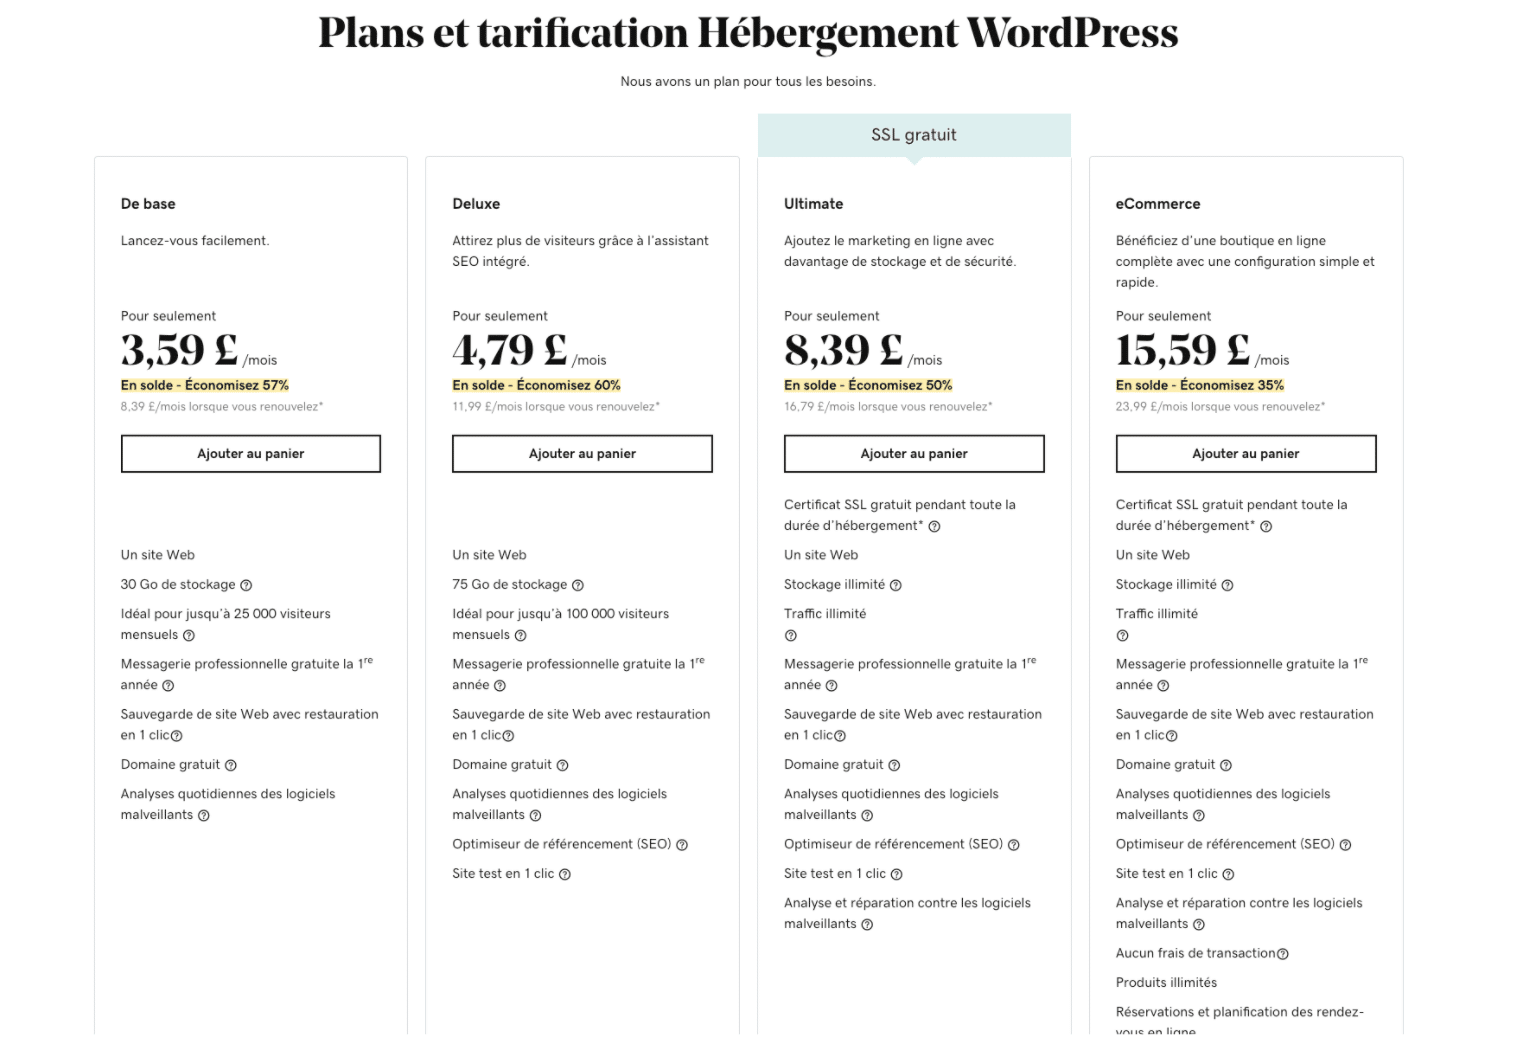 Plans hébergement WordPress GoDaddy